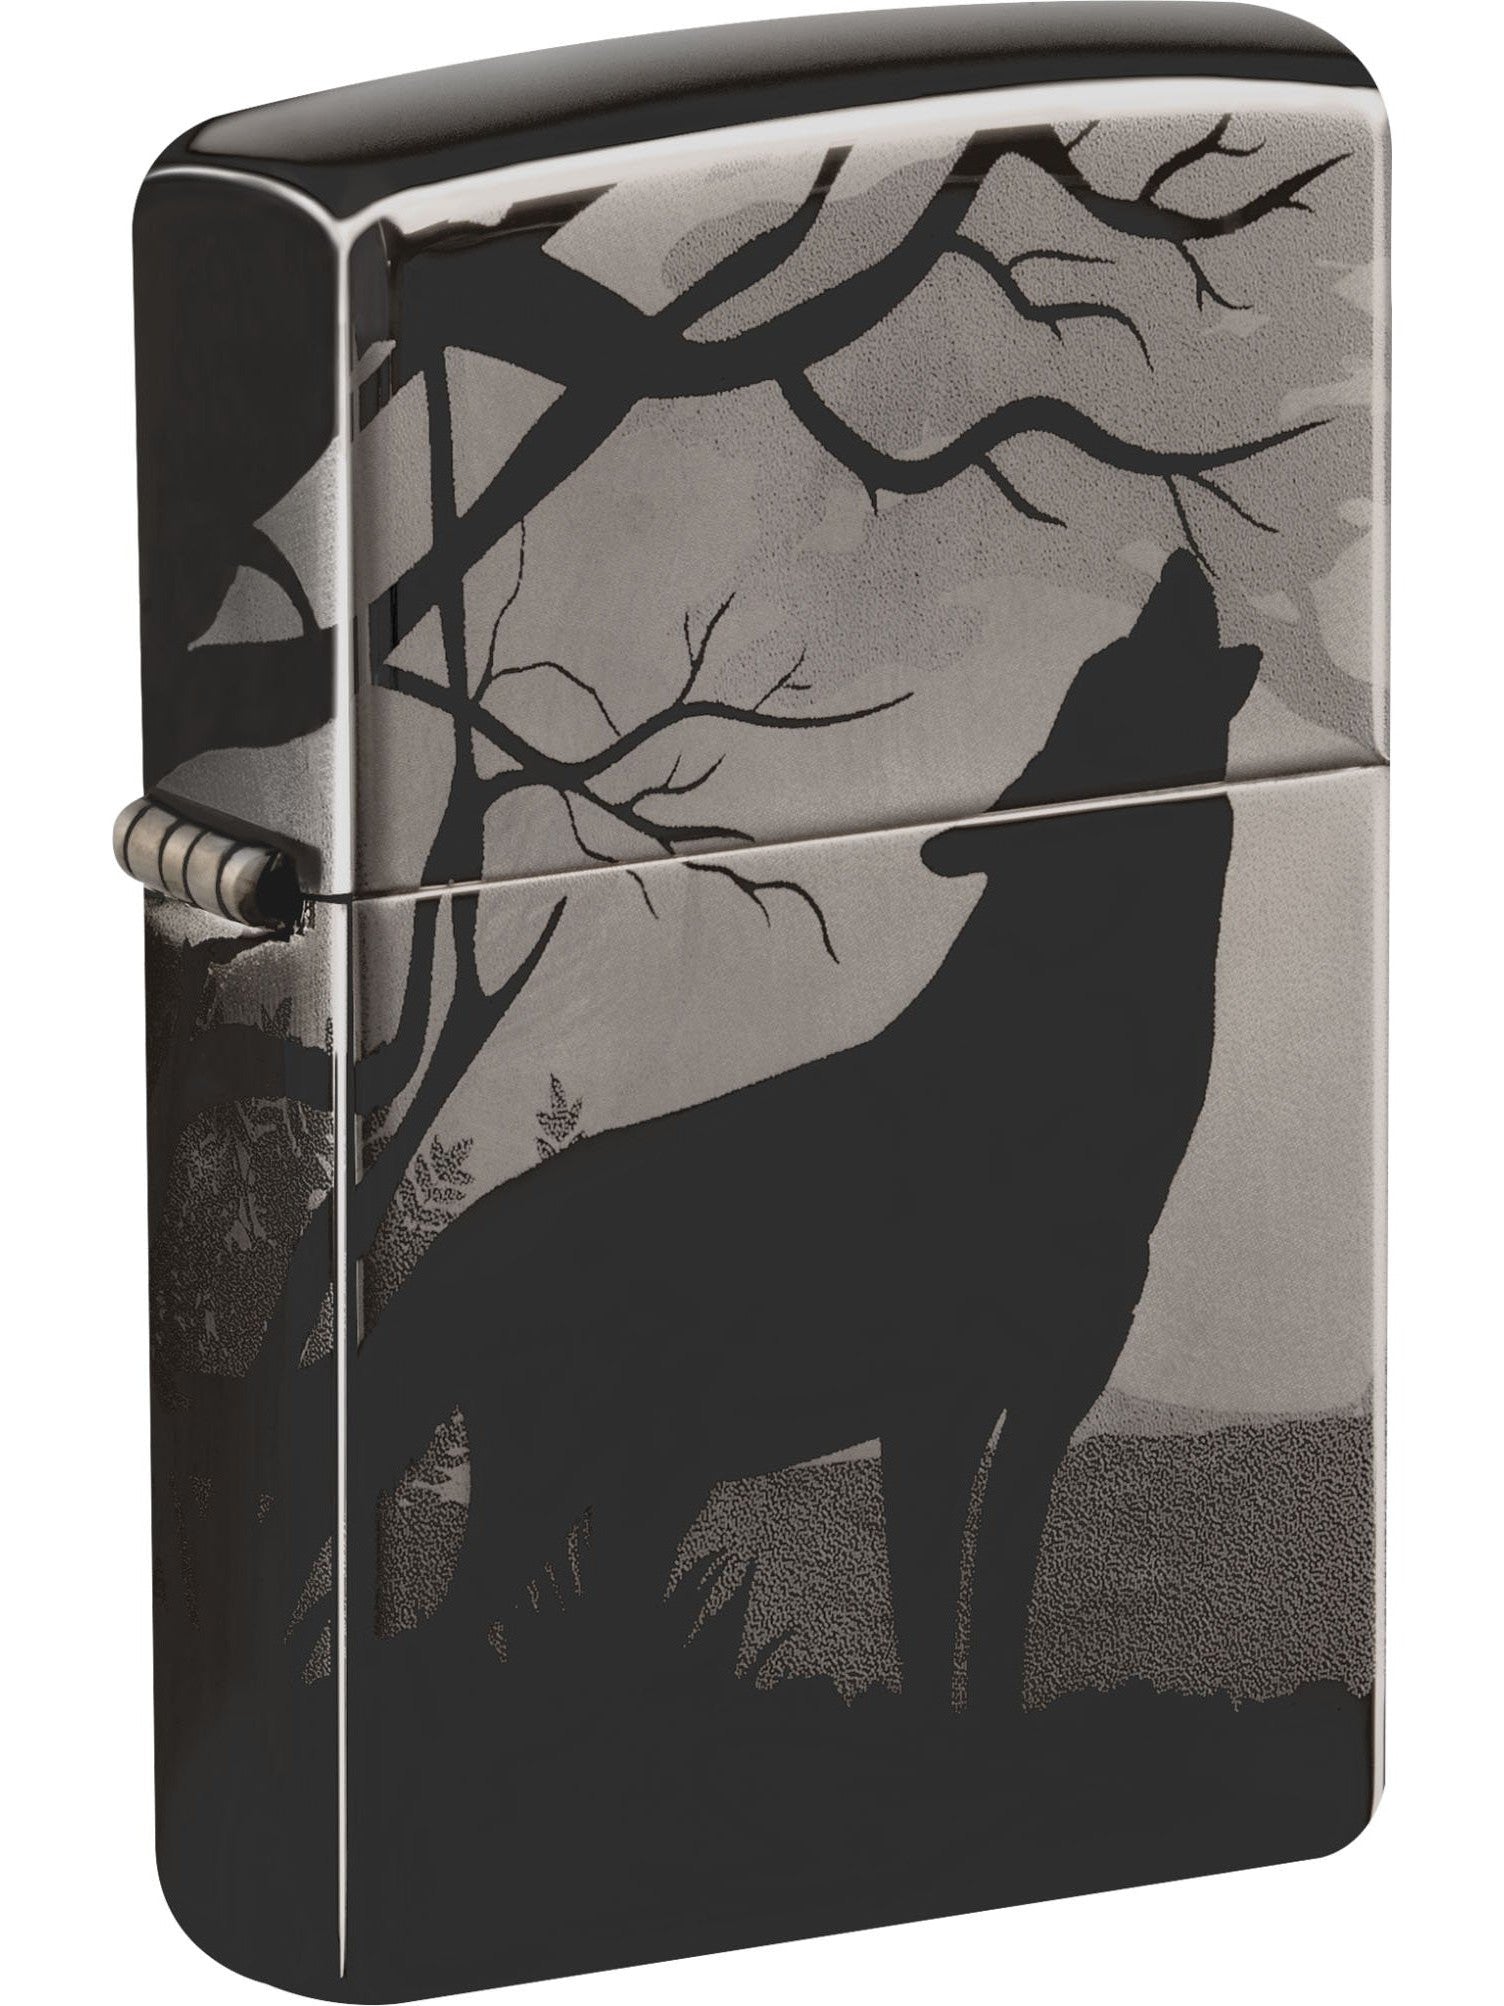 Zippo Lighter: Wolves in Trees, Photo Image 360 - Black Ice 49188 (4555558223965)